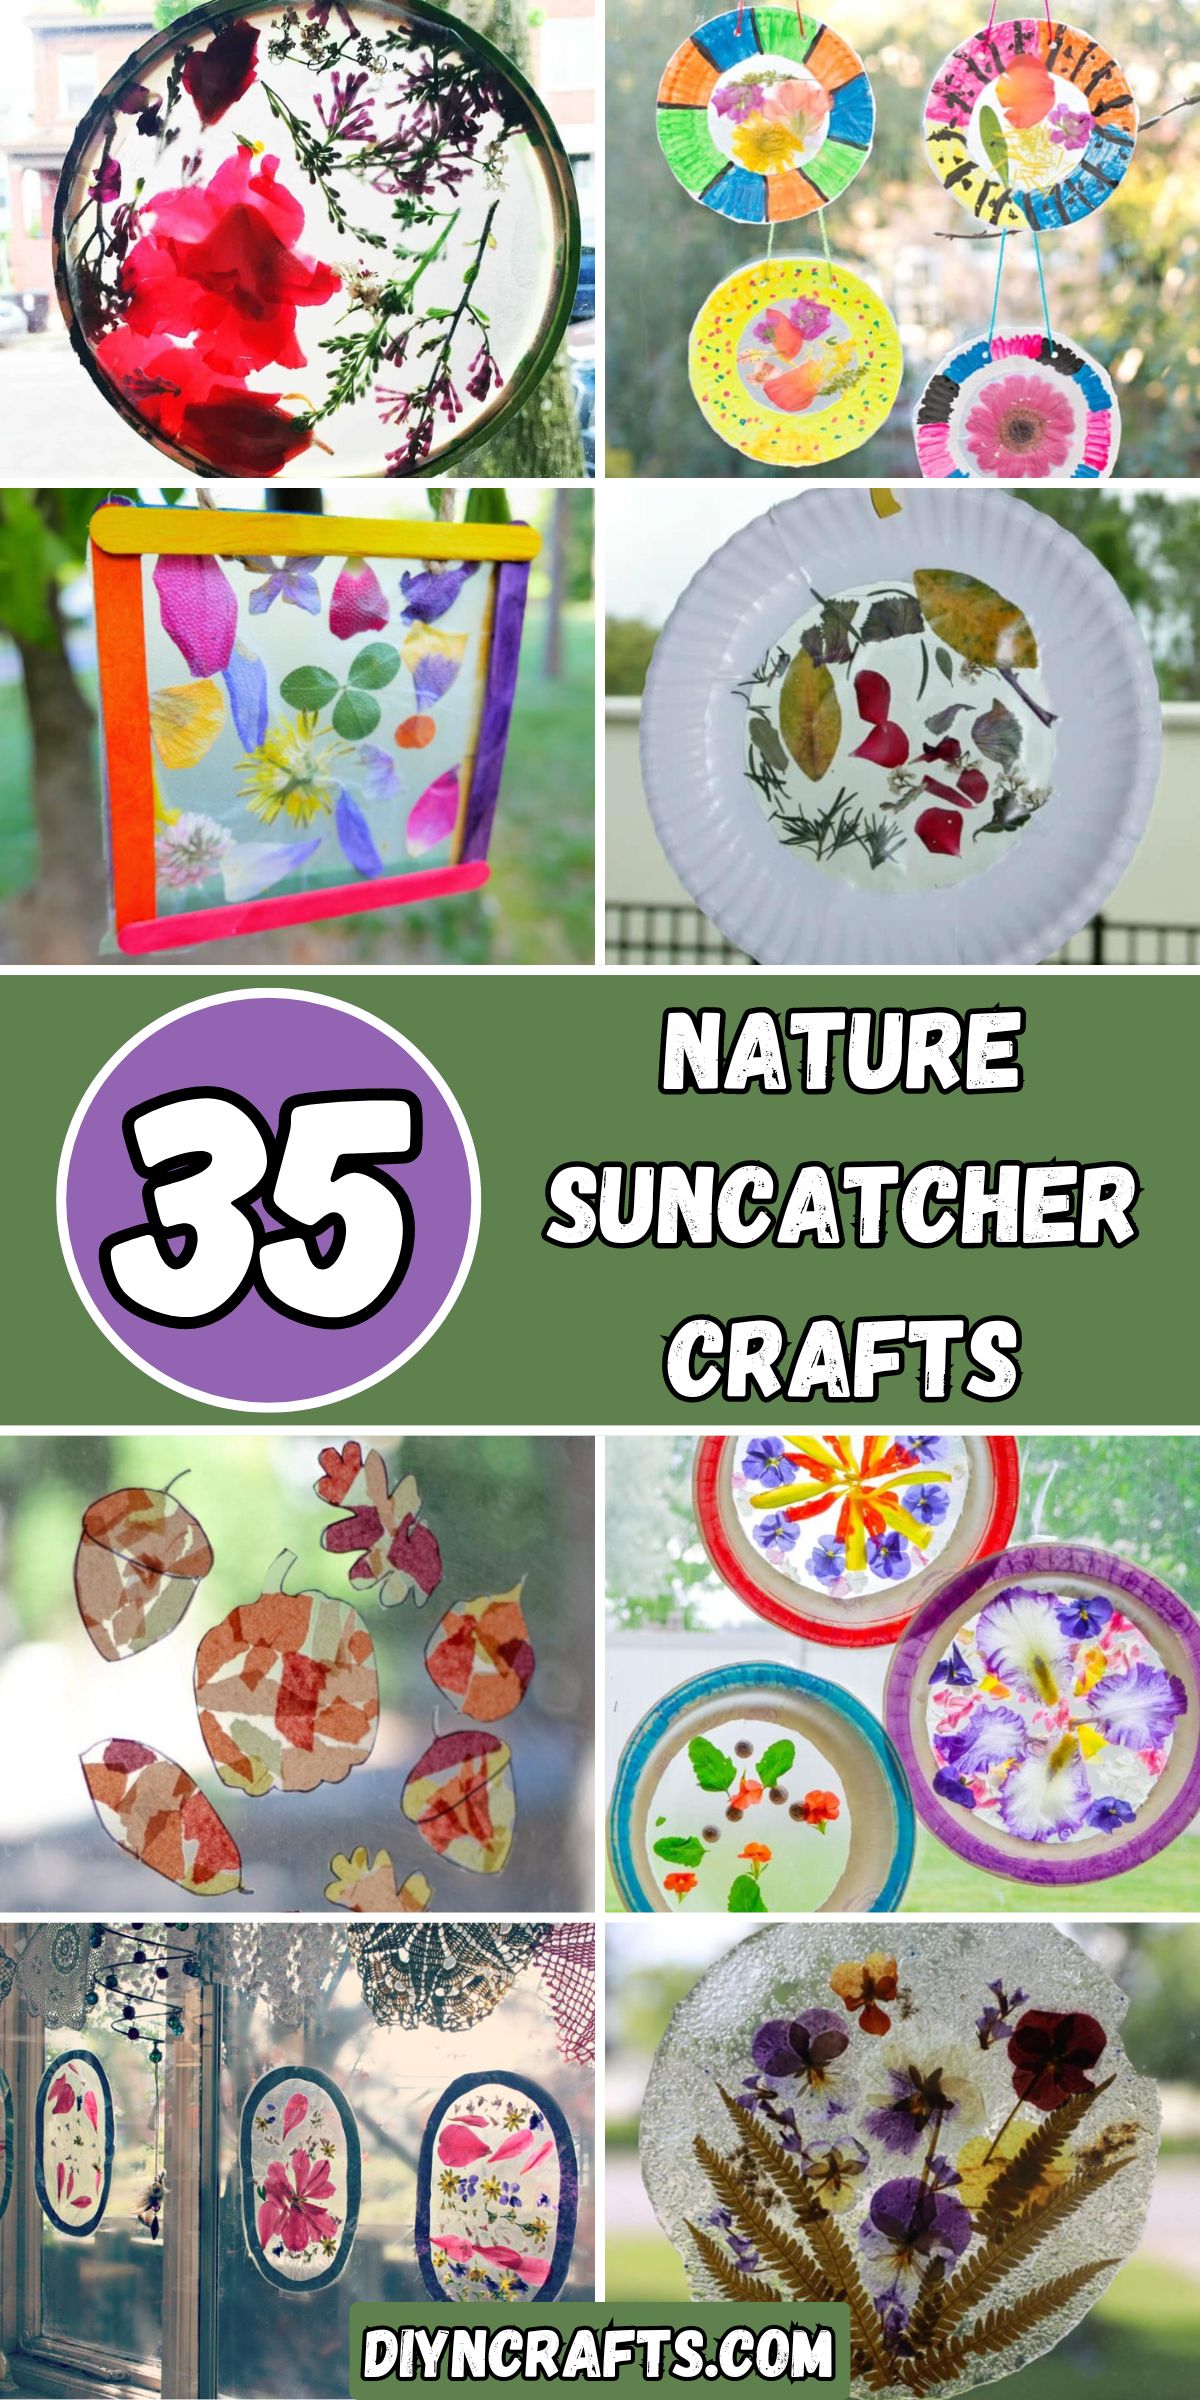 35 Nature Suncatcher Crafts collage.